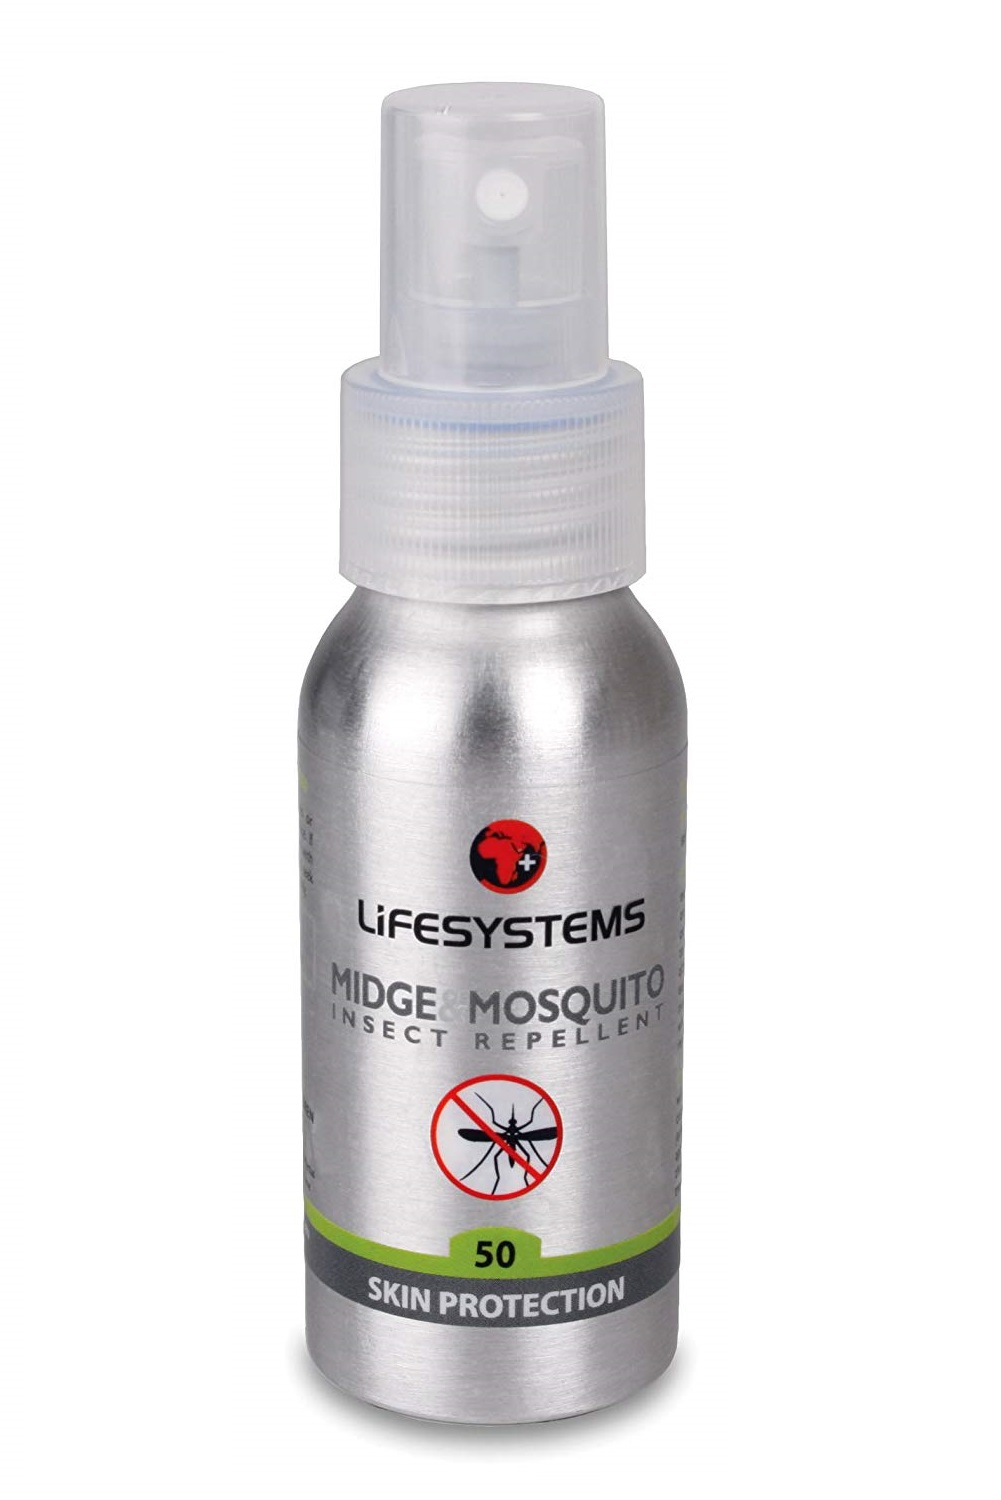 Lifesystems Midge & Mosquito Insect Repellent – 50ml